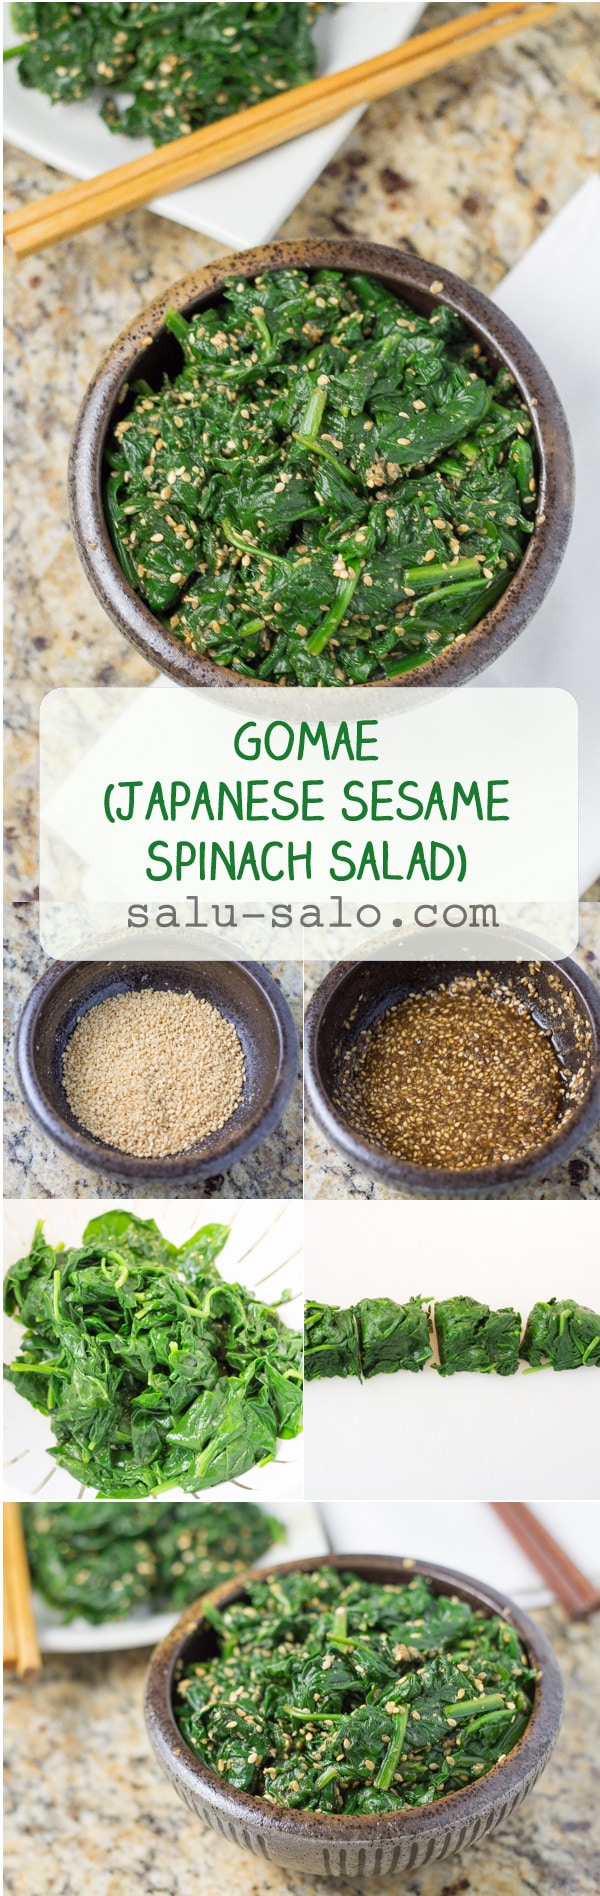 Gomae Japanese Spinach Salad